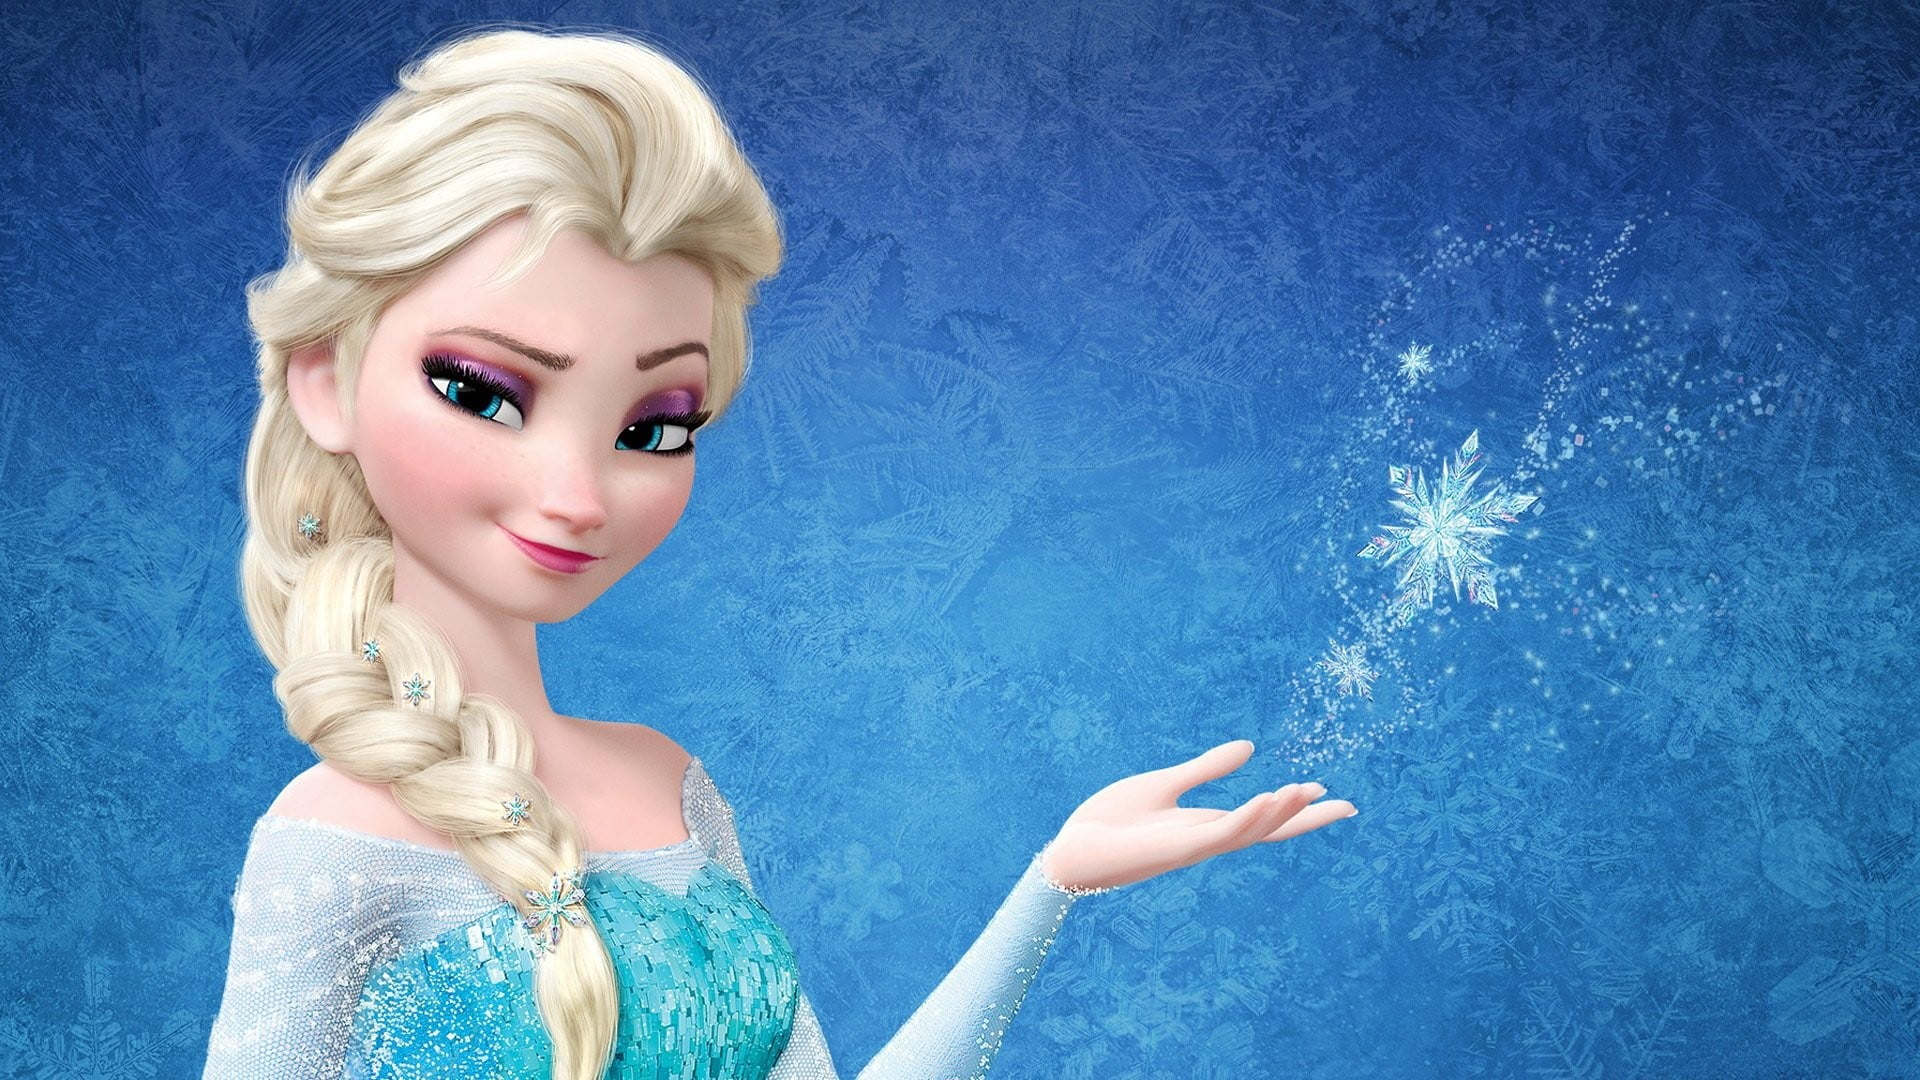 Elsa of Frozen movies Frozen (movie) Princess Elsa animated movies wallpaper